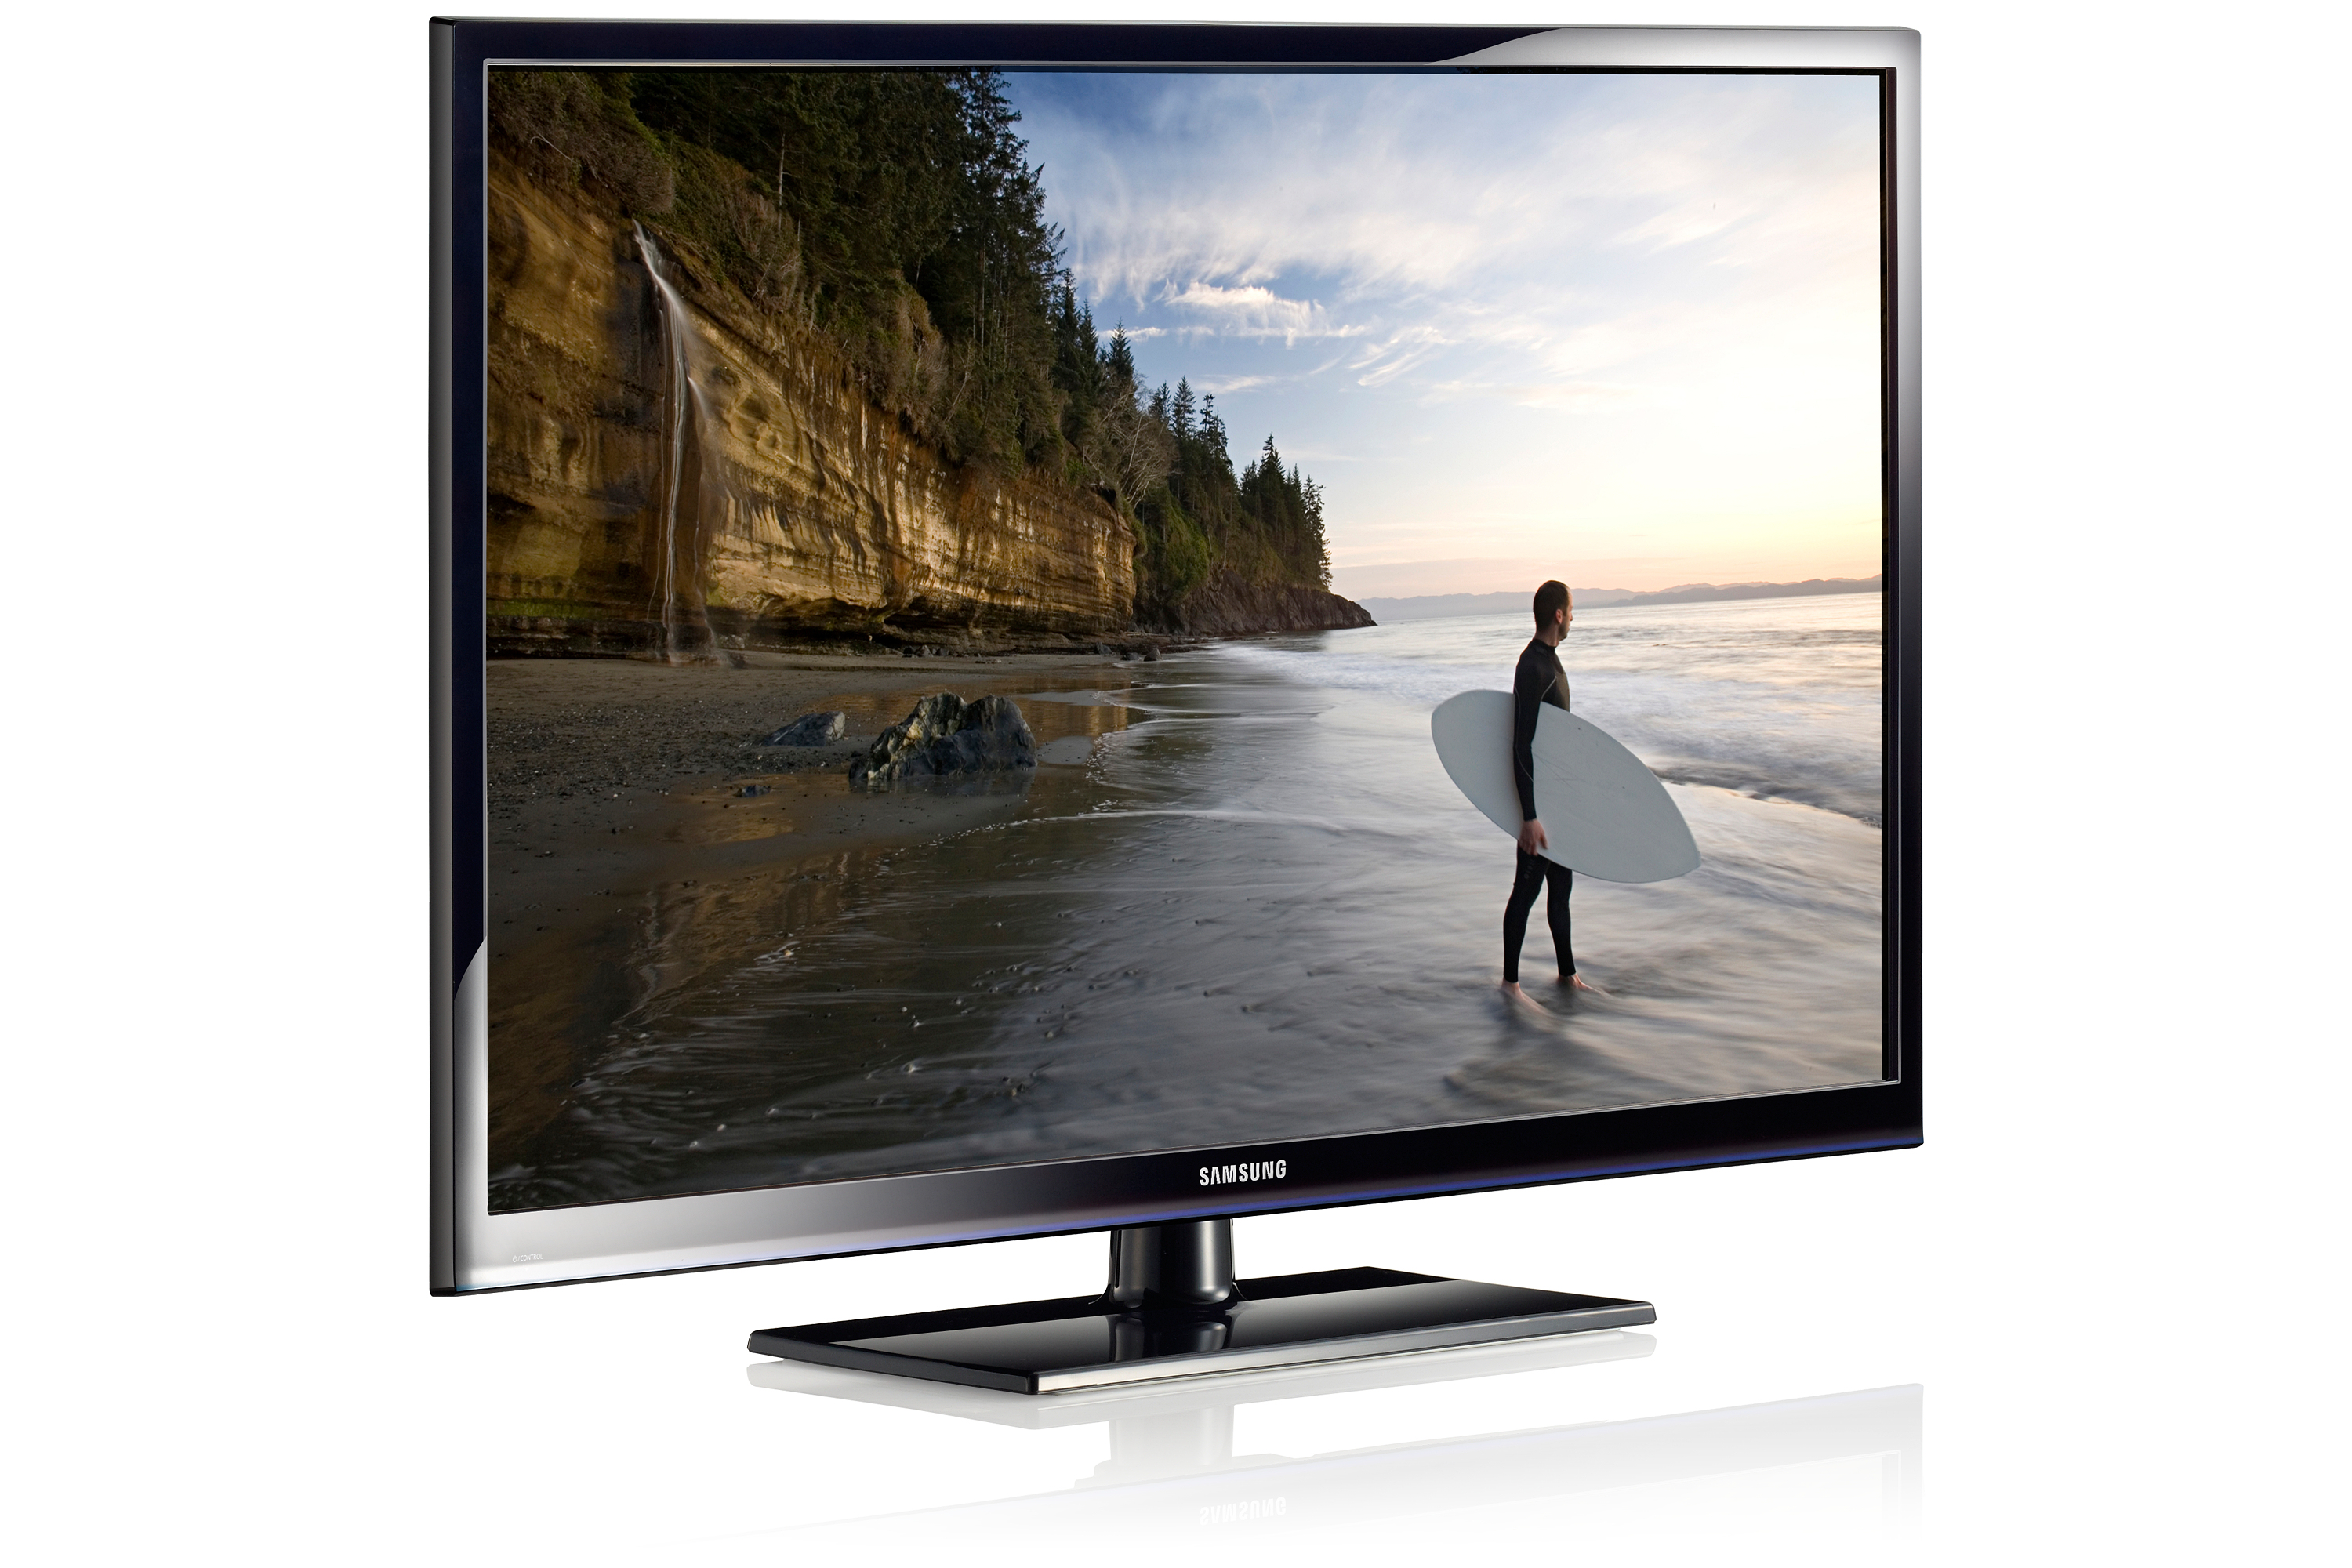 Обзор моделей телевизоров. Samsung Smart TV 40. Телевизор самсунг 42 дюйма смарт. Samsung телевизор 2012 Smart TV. Телевизор самсунг 46 led смарт ТВ.